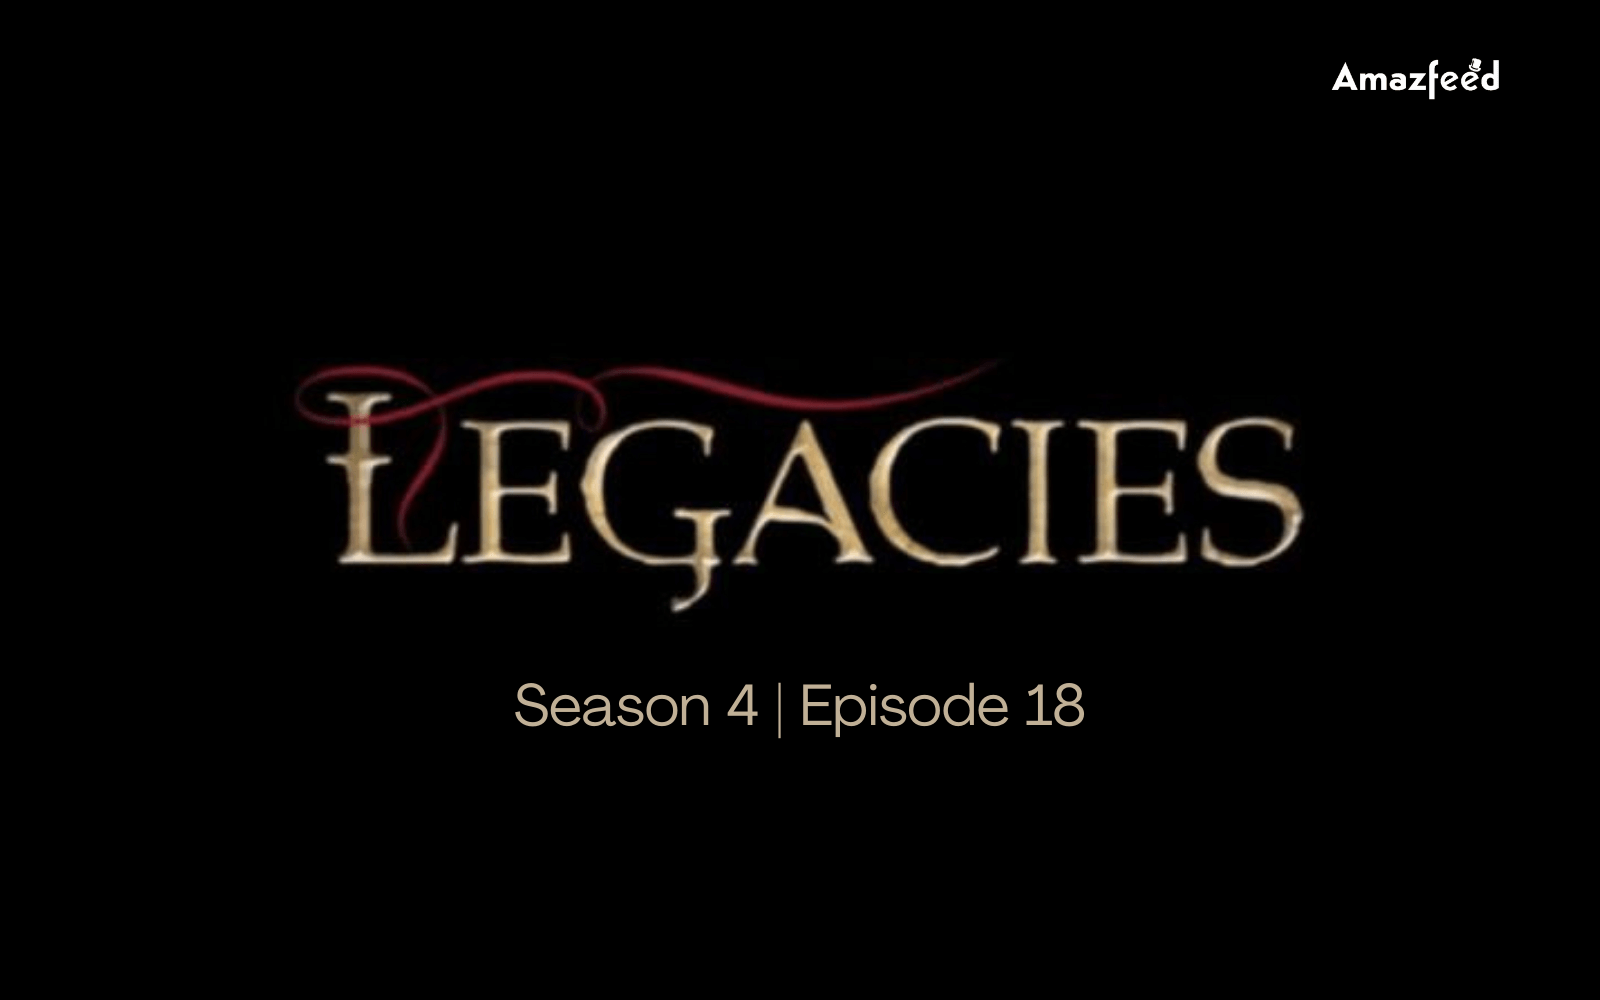 Legacies Season 4 Episode 18 Release date